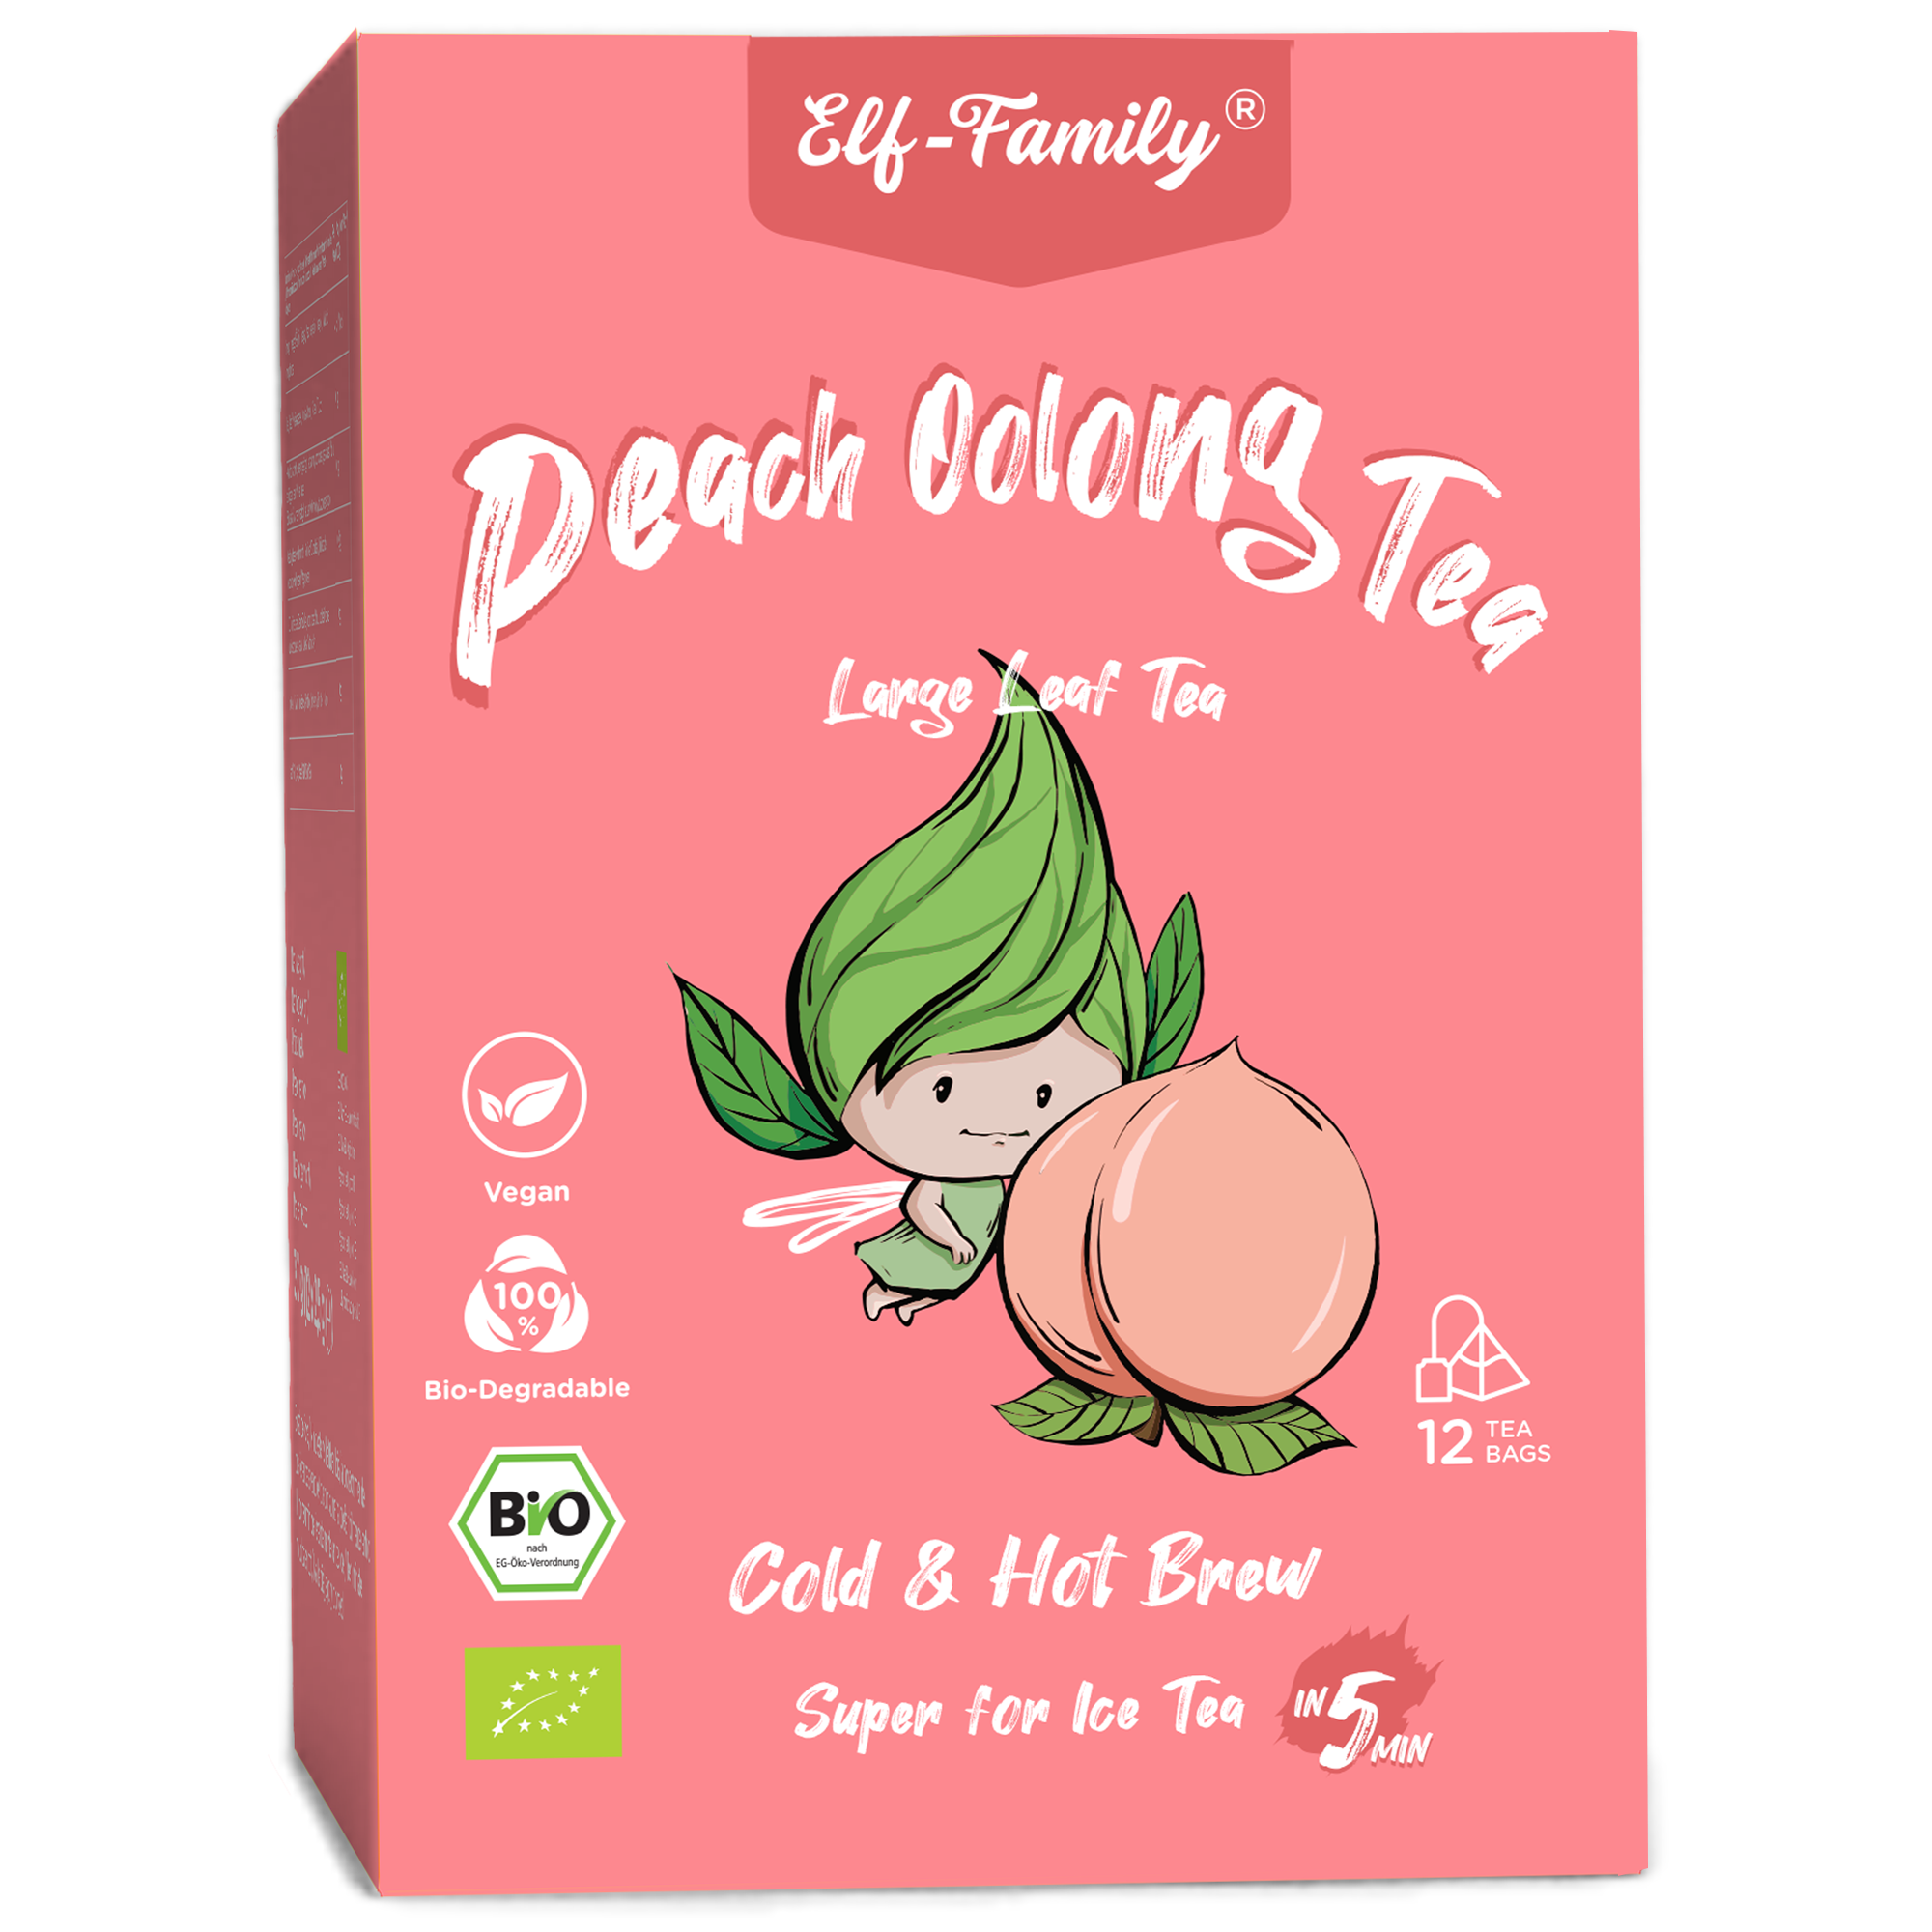 Oolong Peach Iced Tea - Plant Based Jess